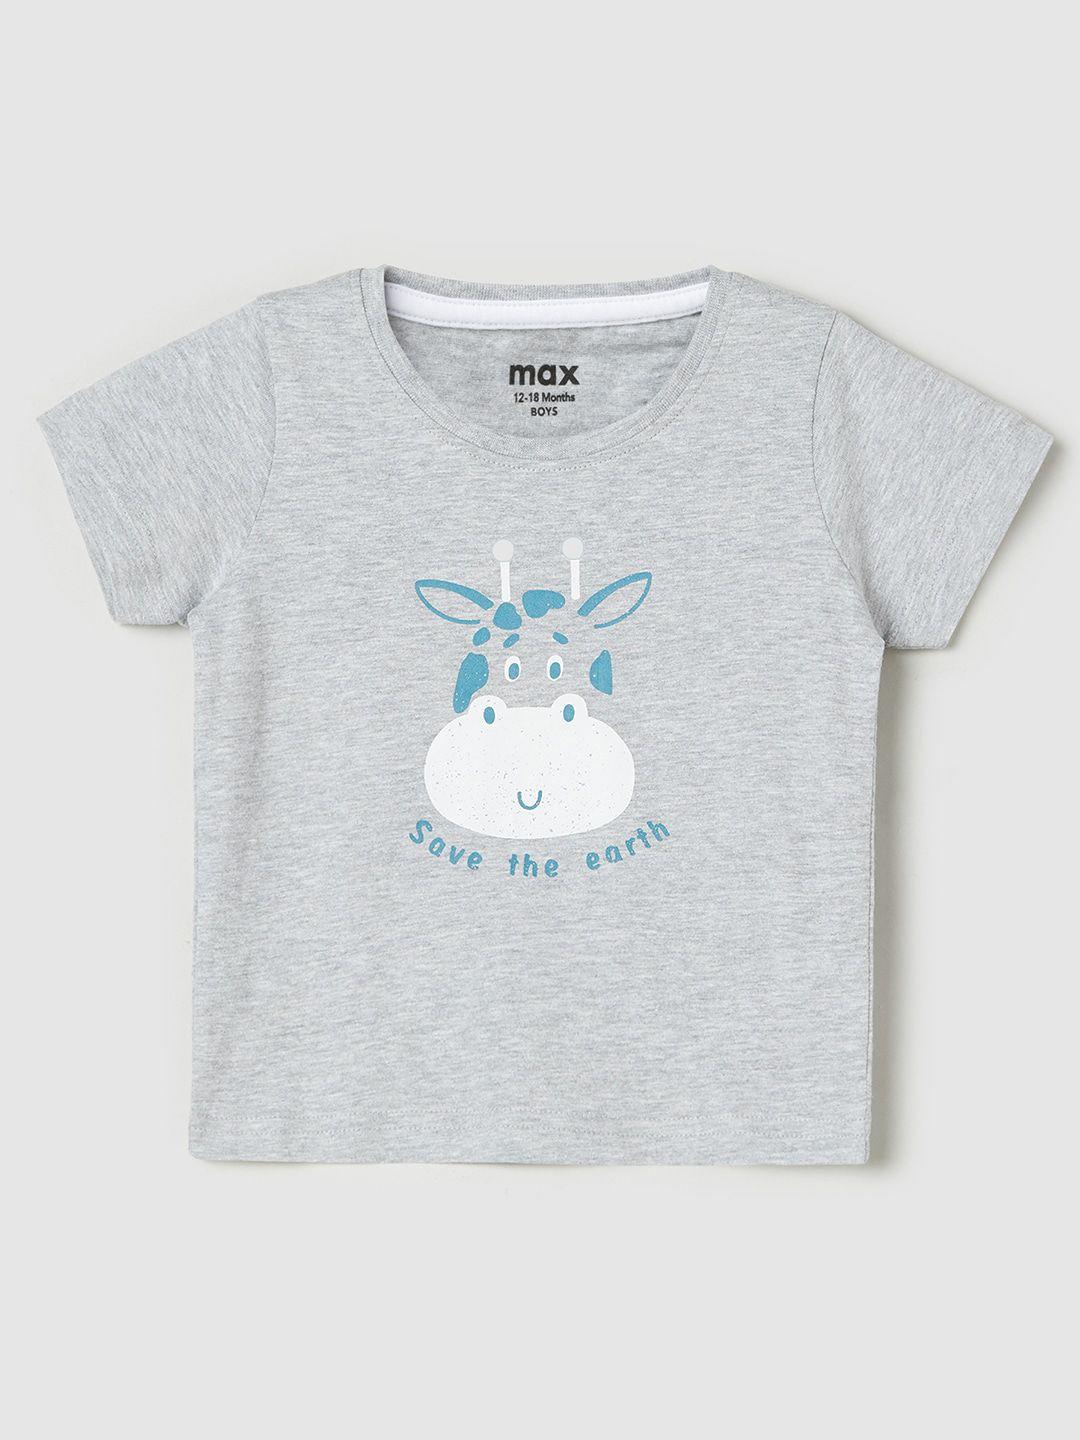 max Infants Boys Graphic Printed Cotton T-shirt